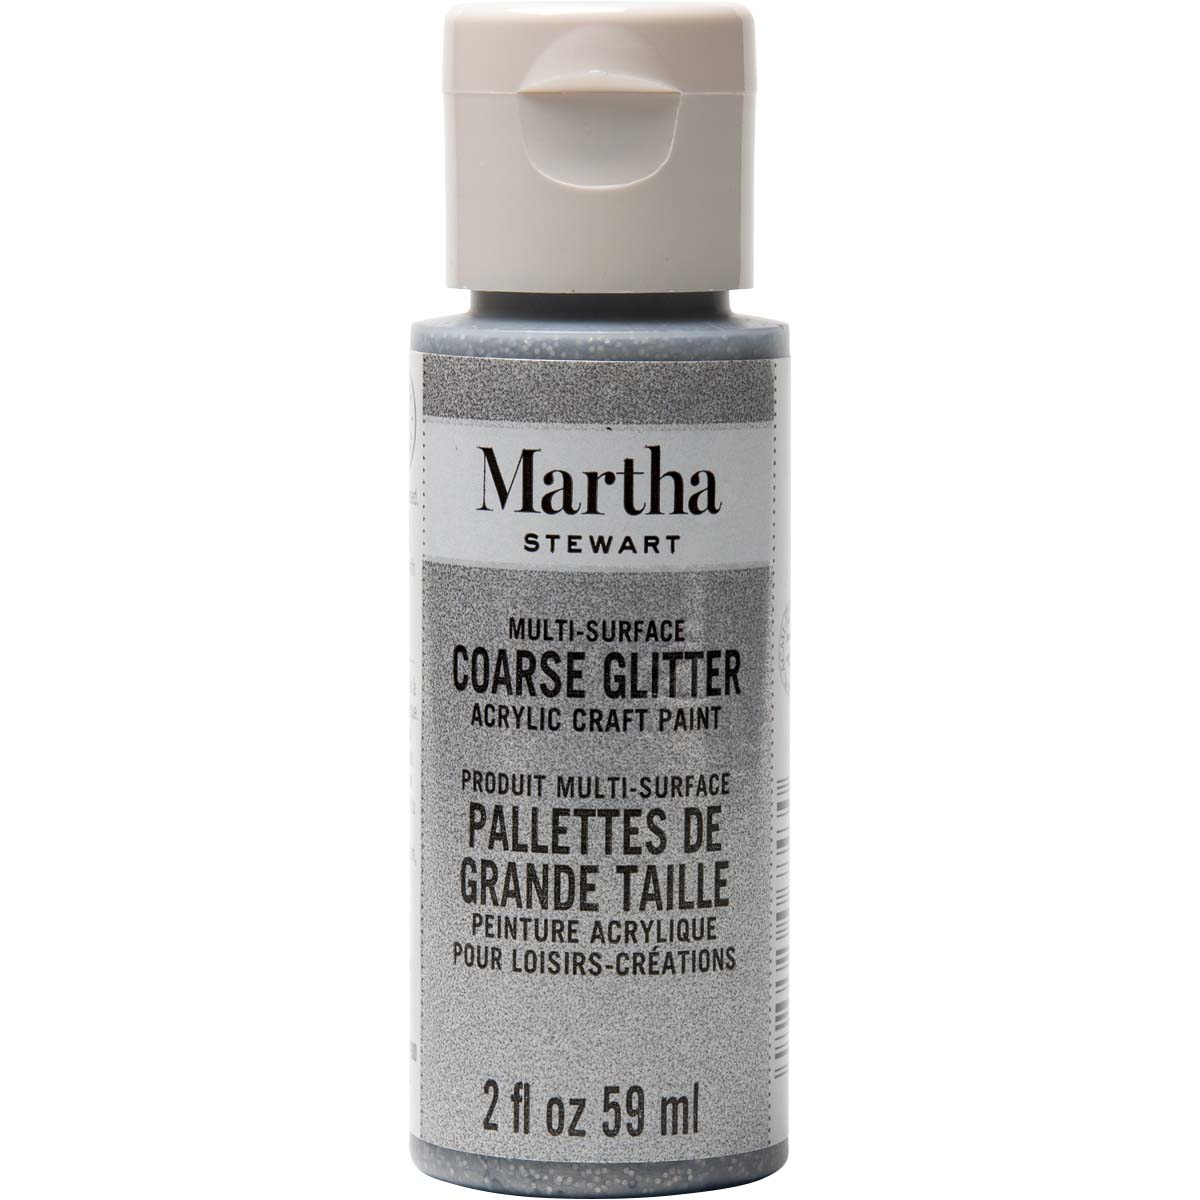 Martha Stewart ® Multi-Surface Coarse Glitter Acrylic Craft Paint - Sterling, 2 oz. - 32960CA